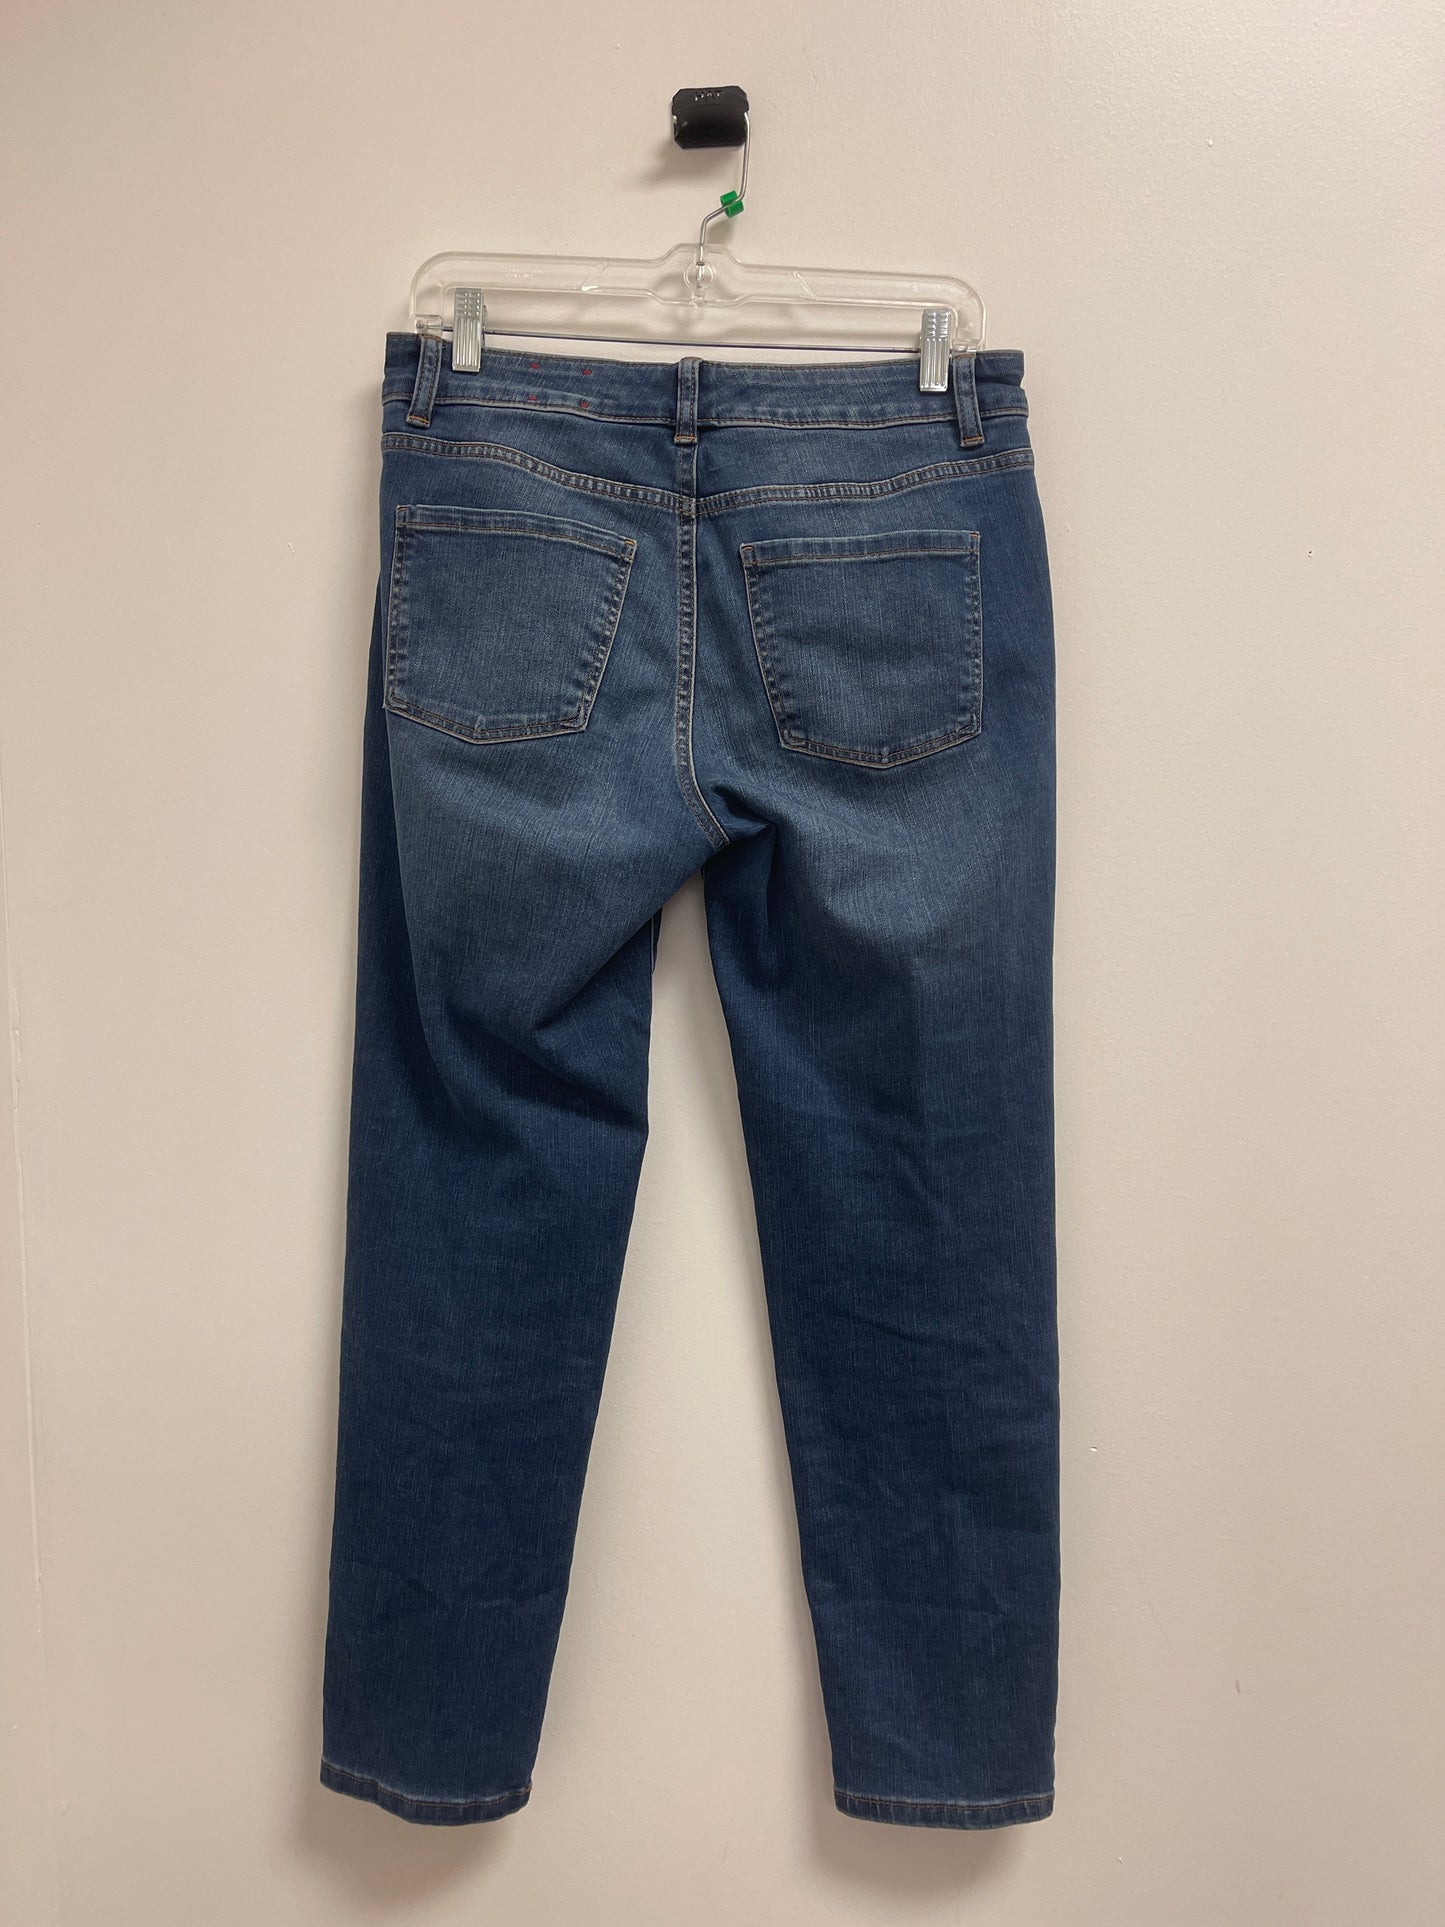 Jeans Skinny By Talbots O  Size: 6